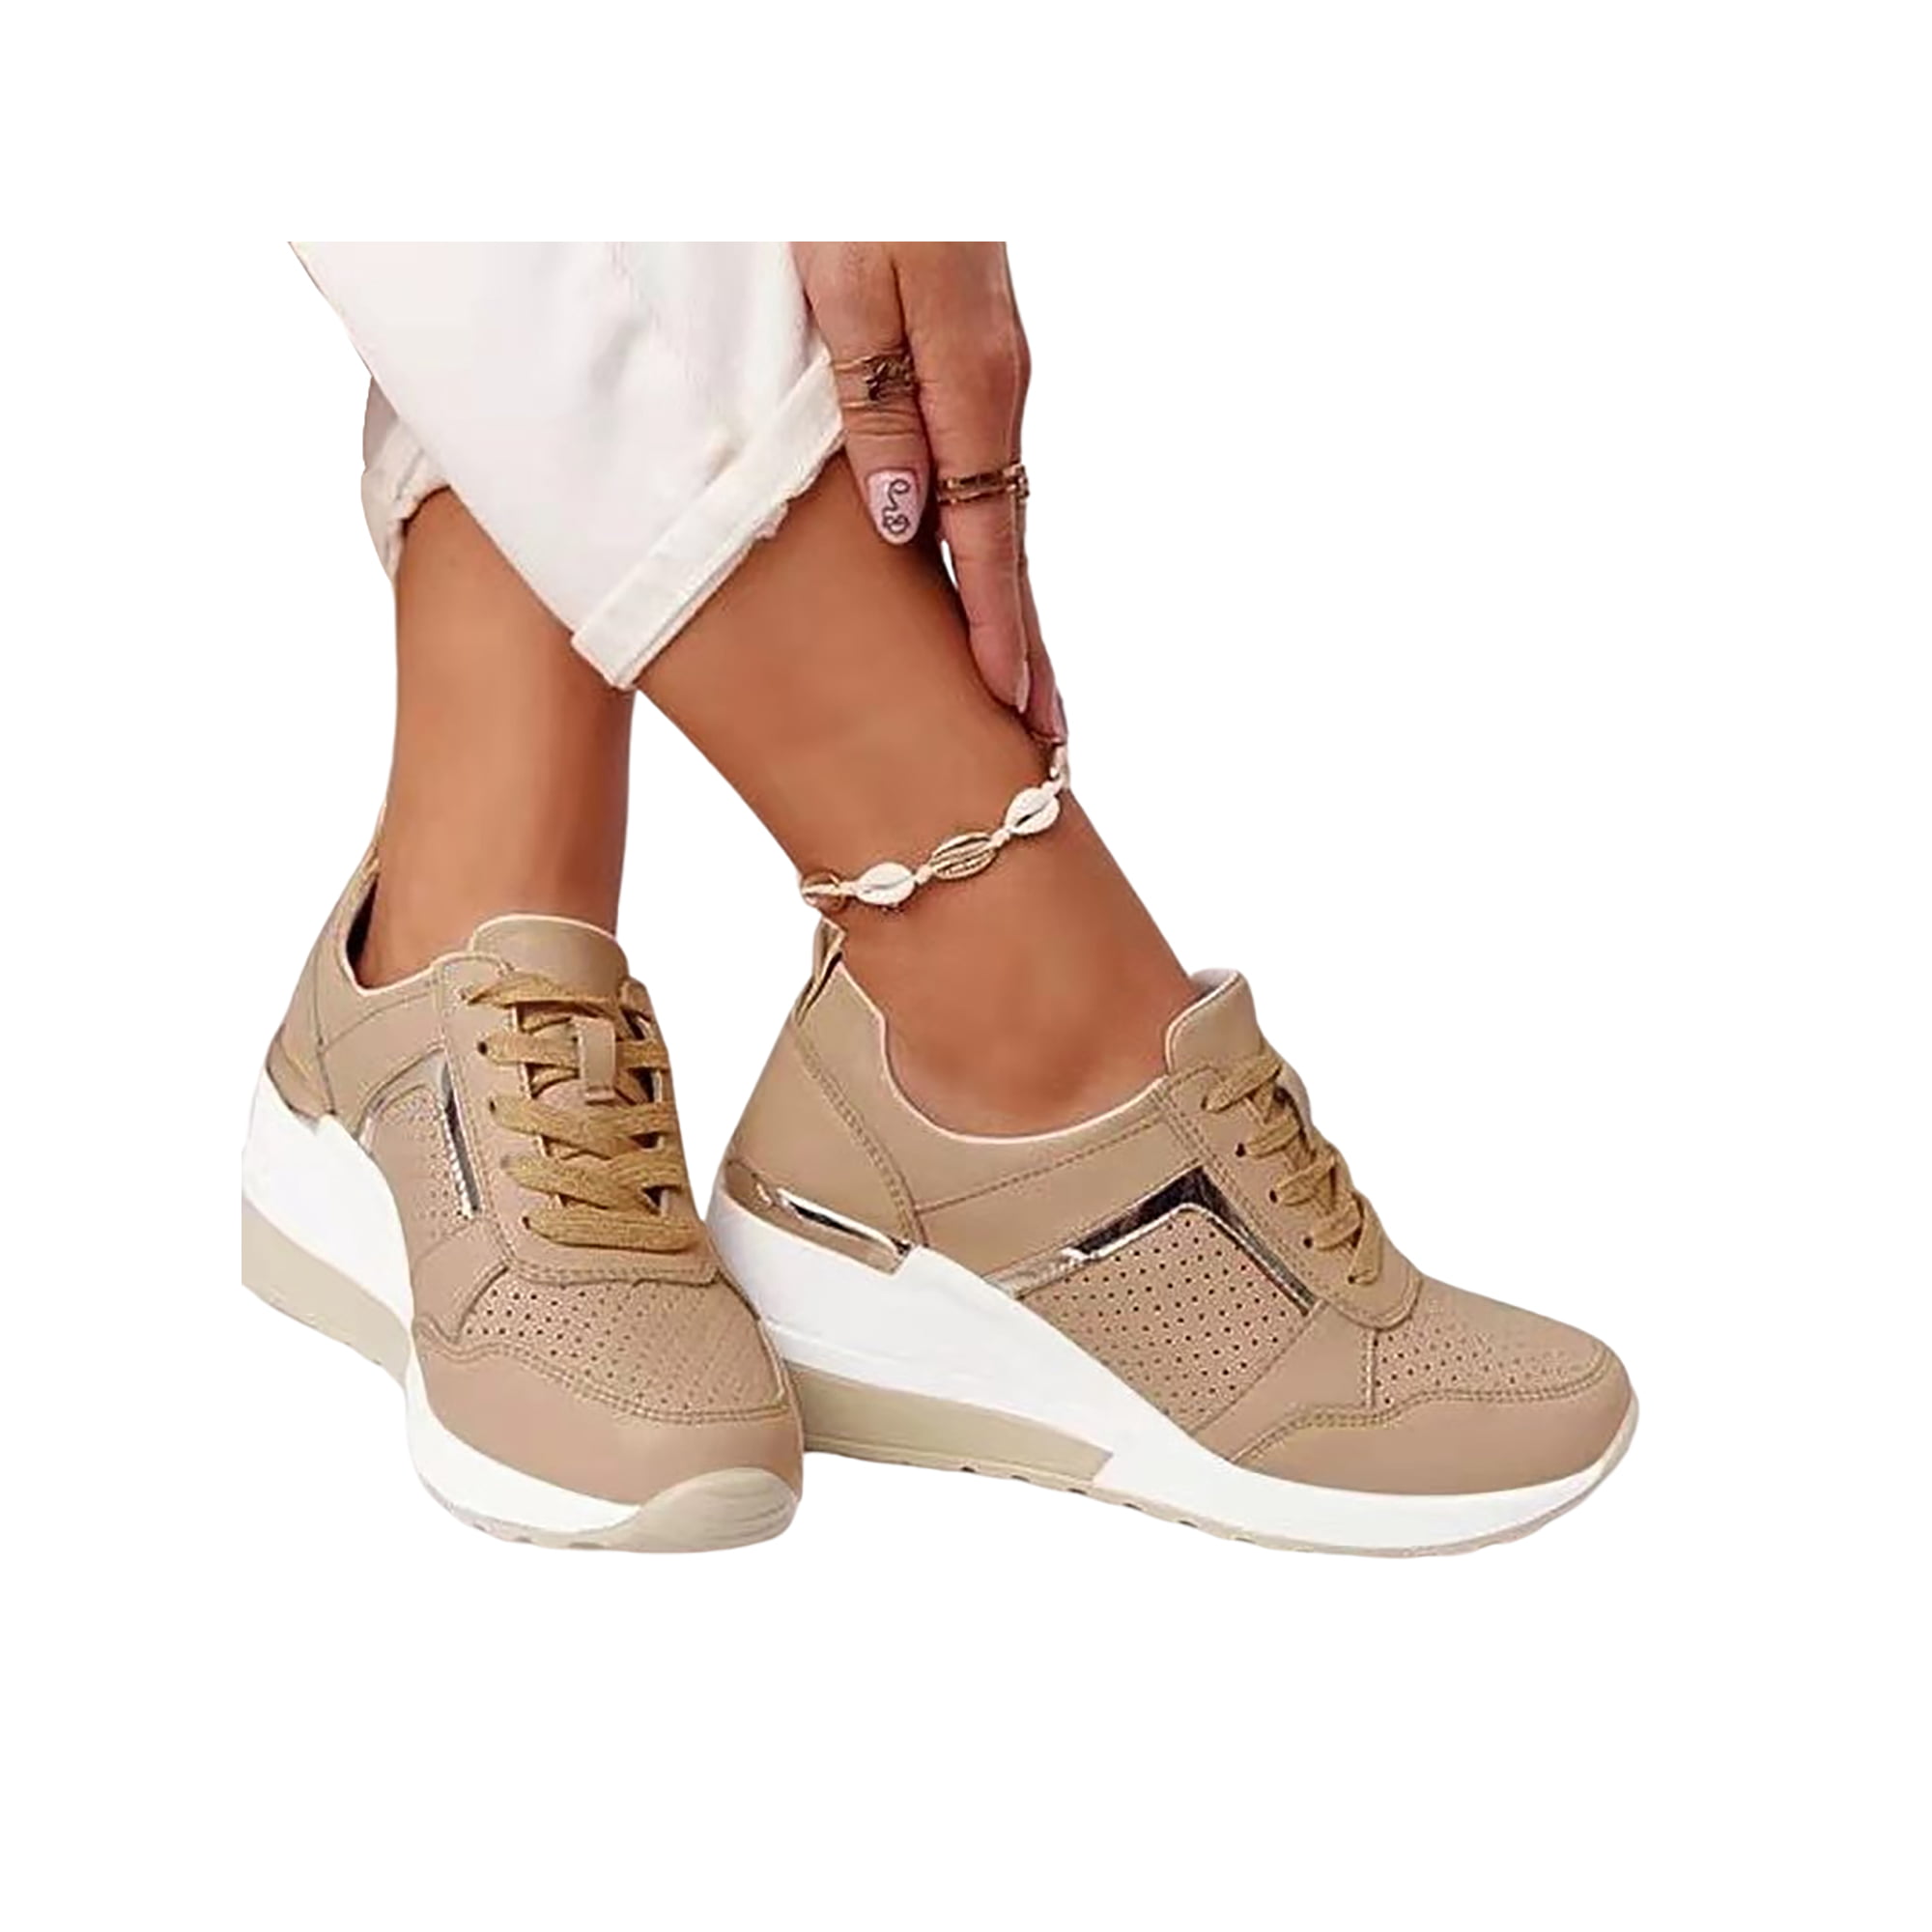 Gomelly Womens Hidden Wedge Sneakers High Heeld Lace Up Lightweight Shoes 8.5 Khaki - Walmart.com